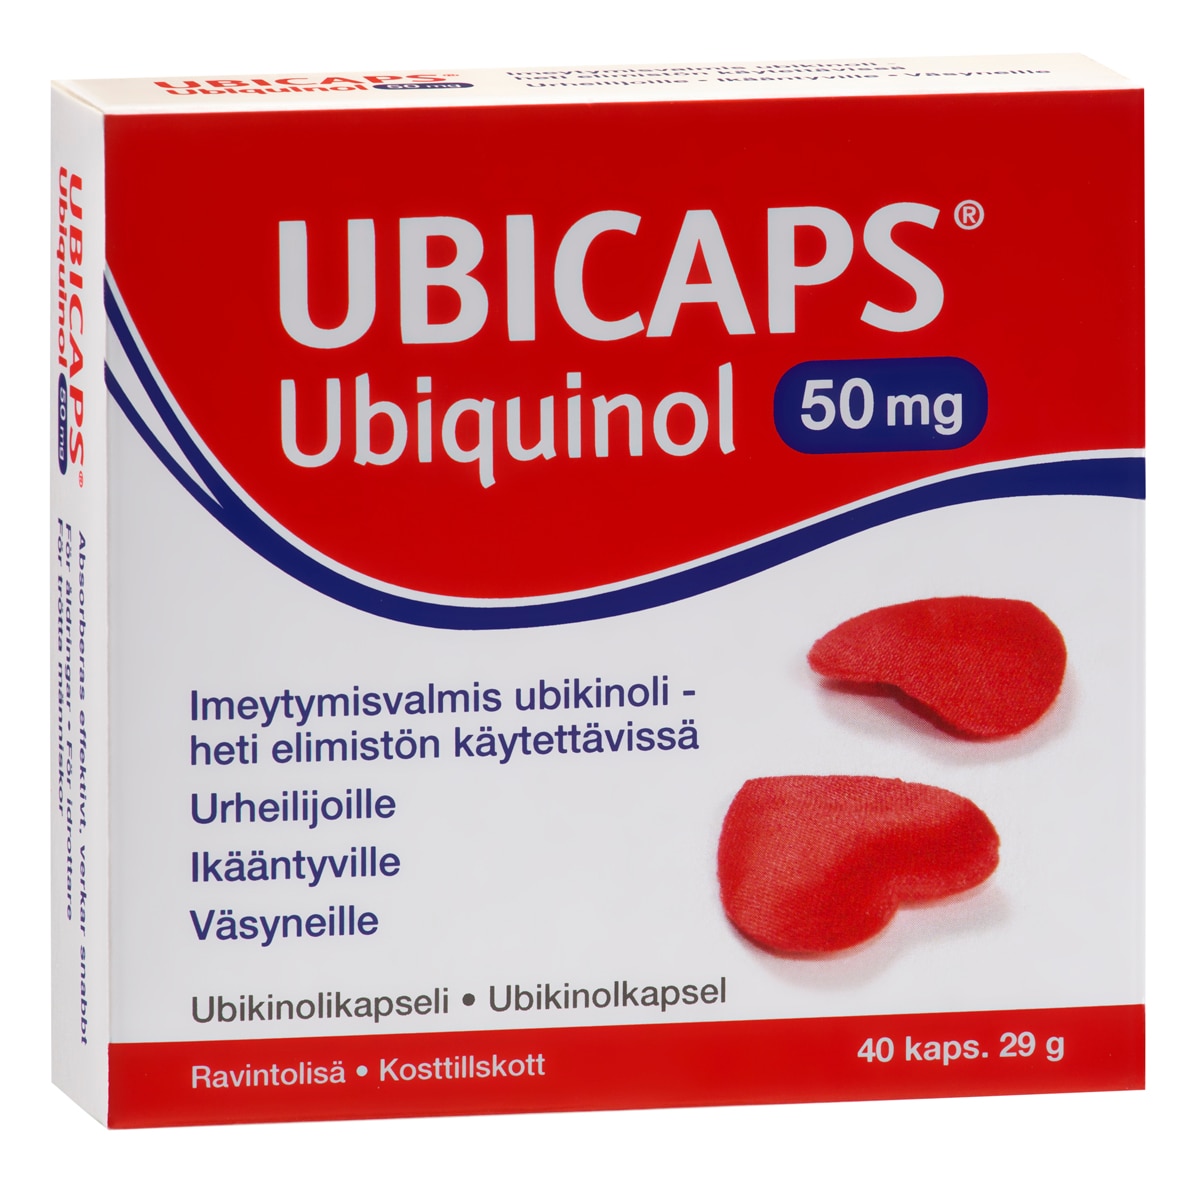 Ubicaps® Ubiquinol 50 mg